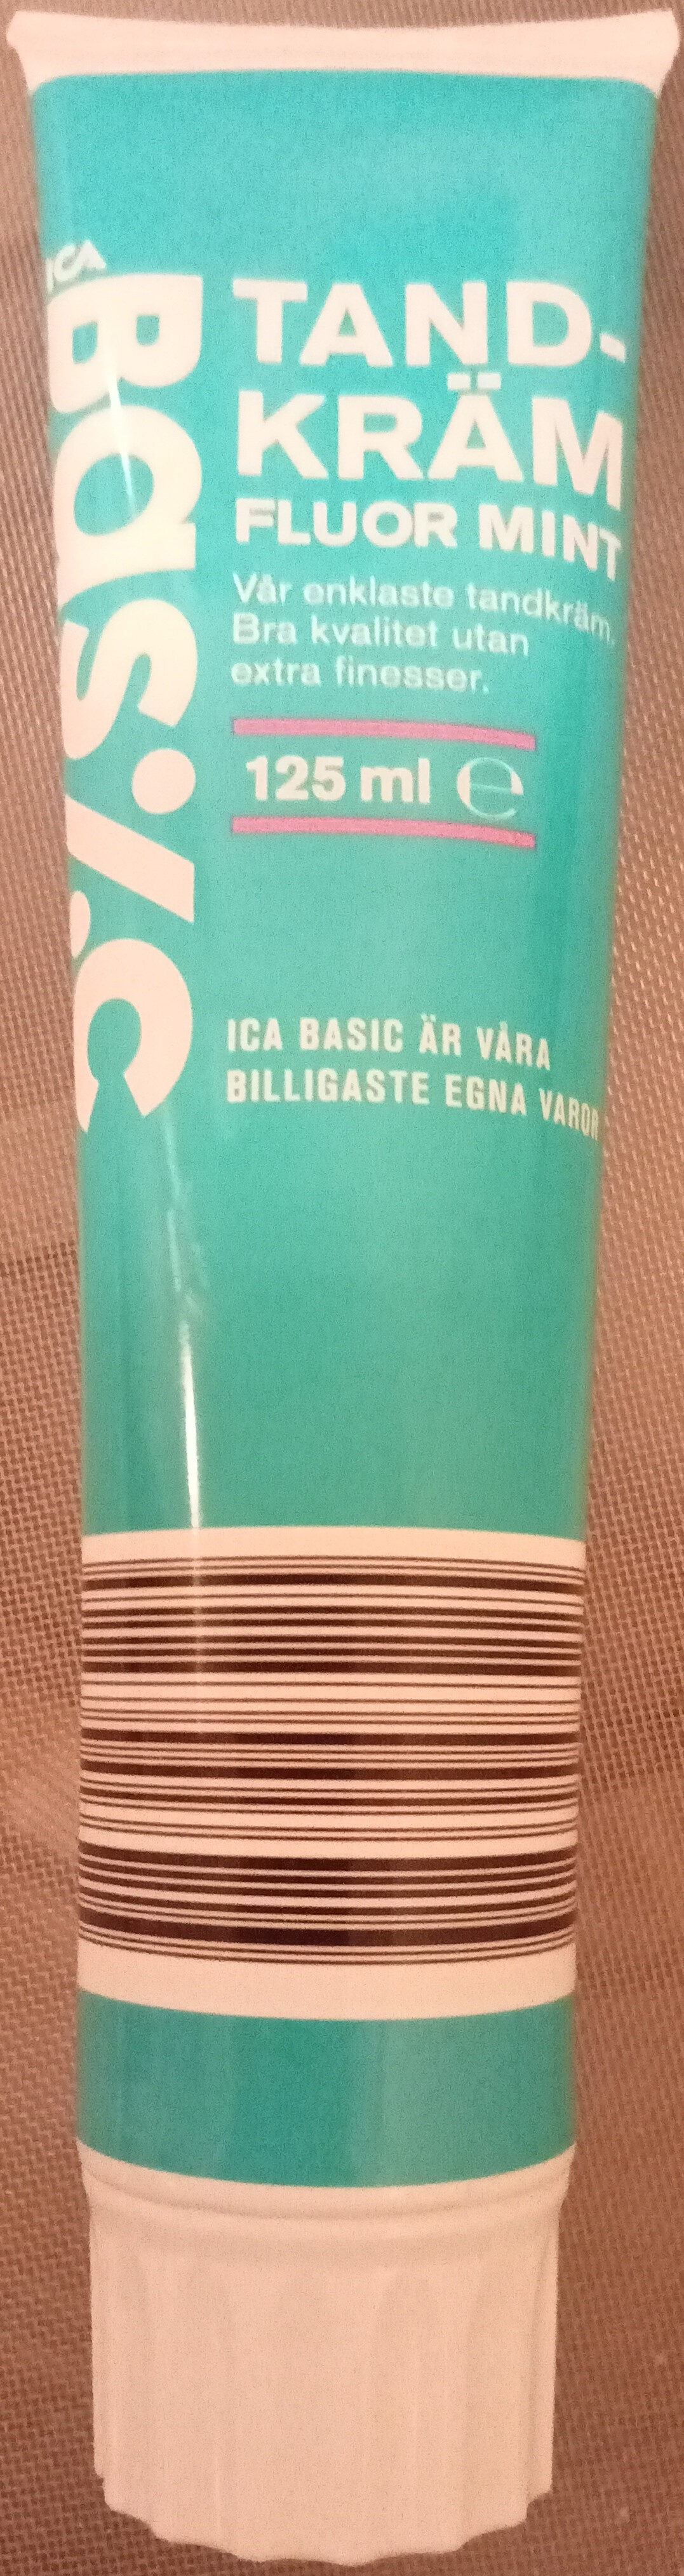 ICA Basic Tandkräm, Fluor mint - Produit - sv